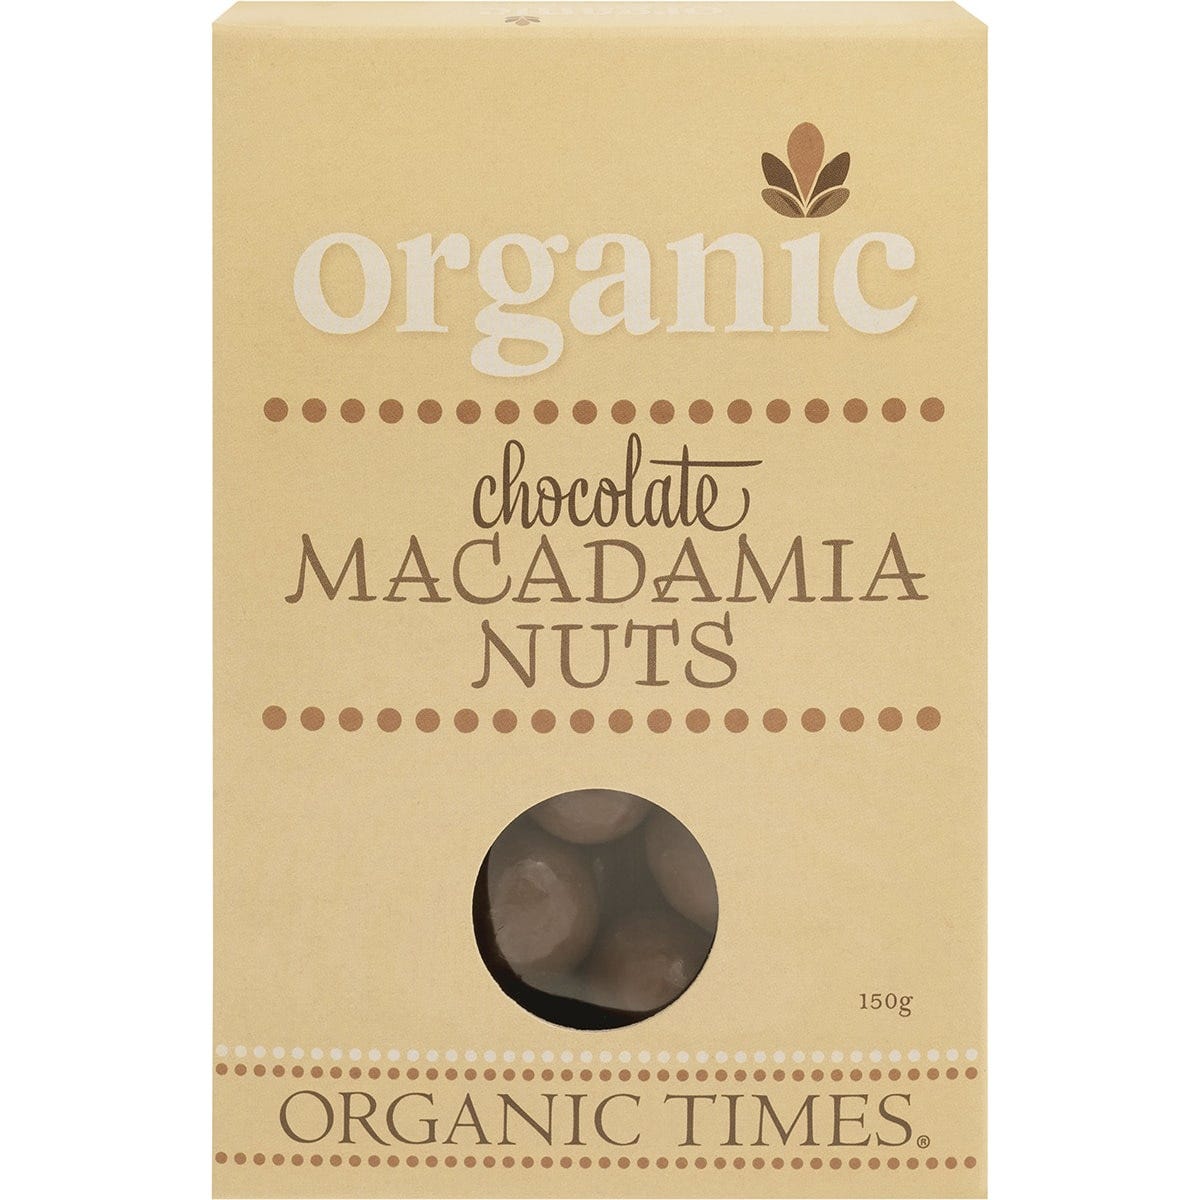 Organic Times Milk Chocolate Macadamia Nuts 150g - Dr Earth - Chocolate & Carob